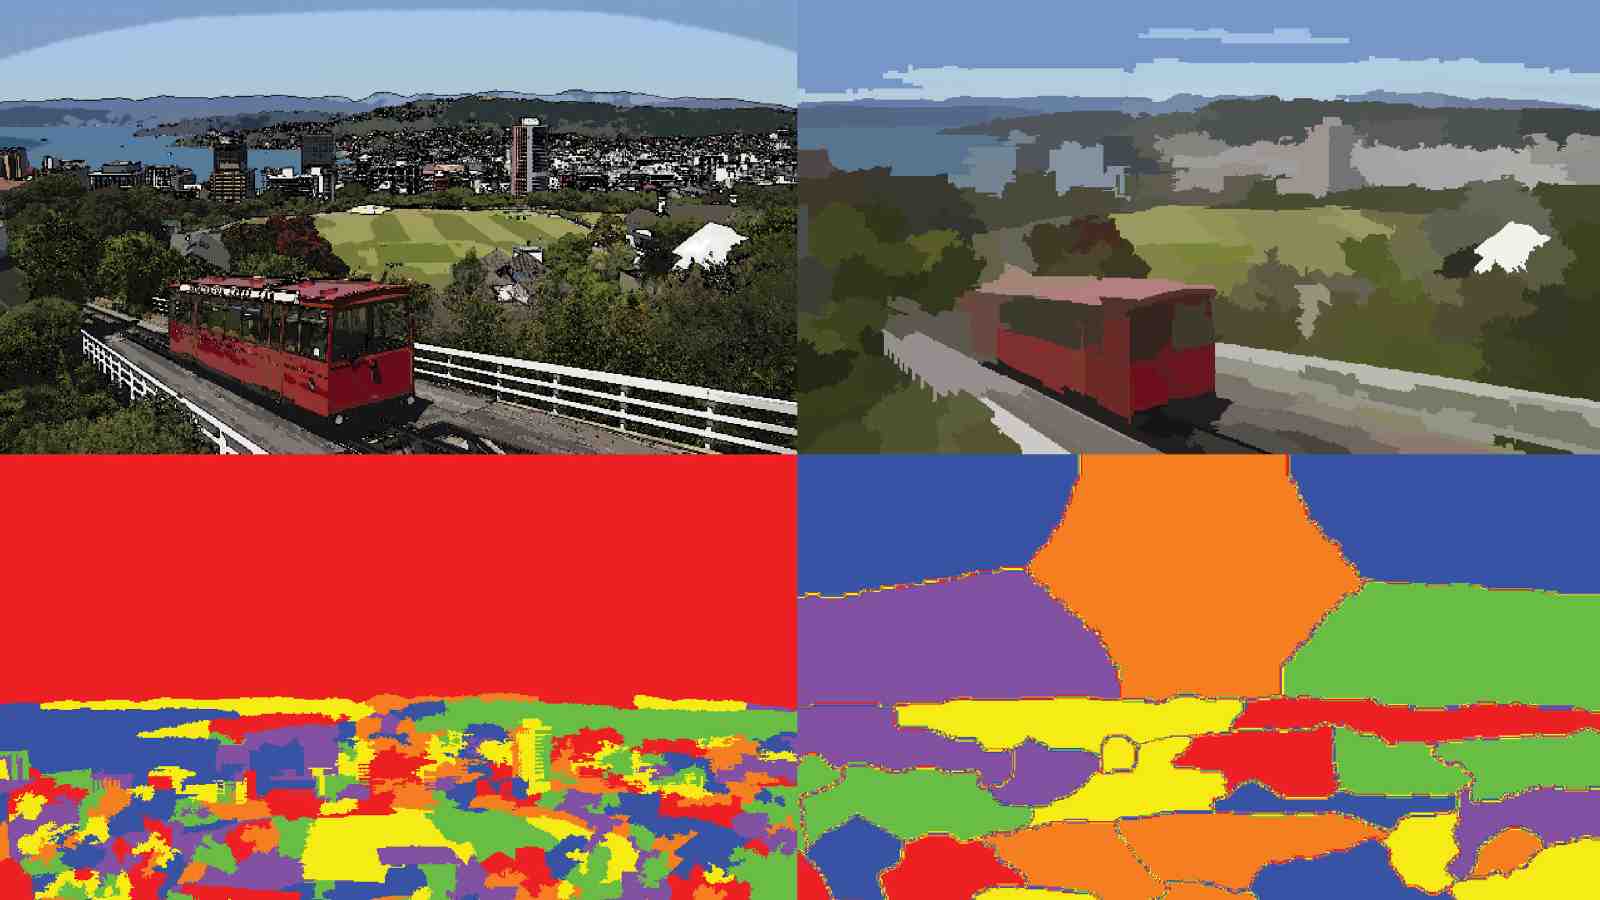 Wellington Cable Car image with different salient object detection algorithms